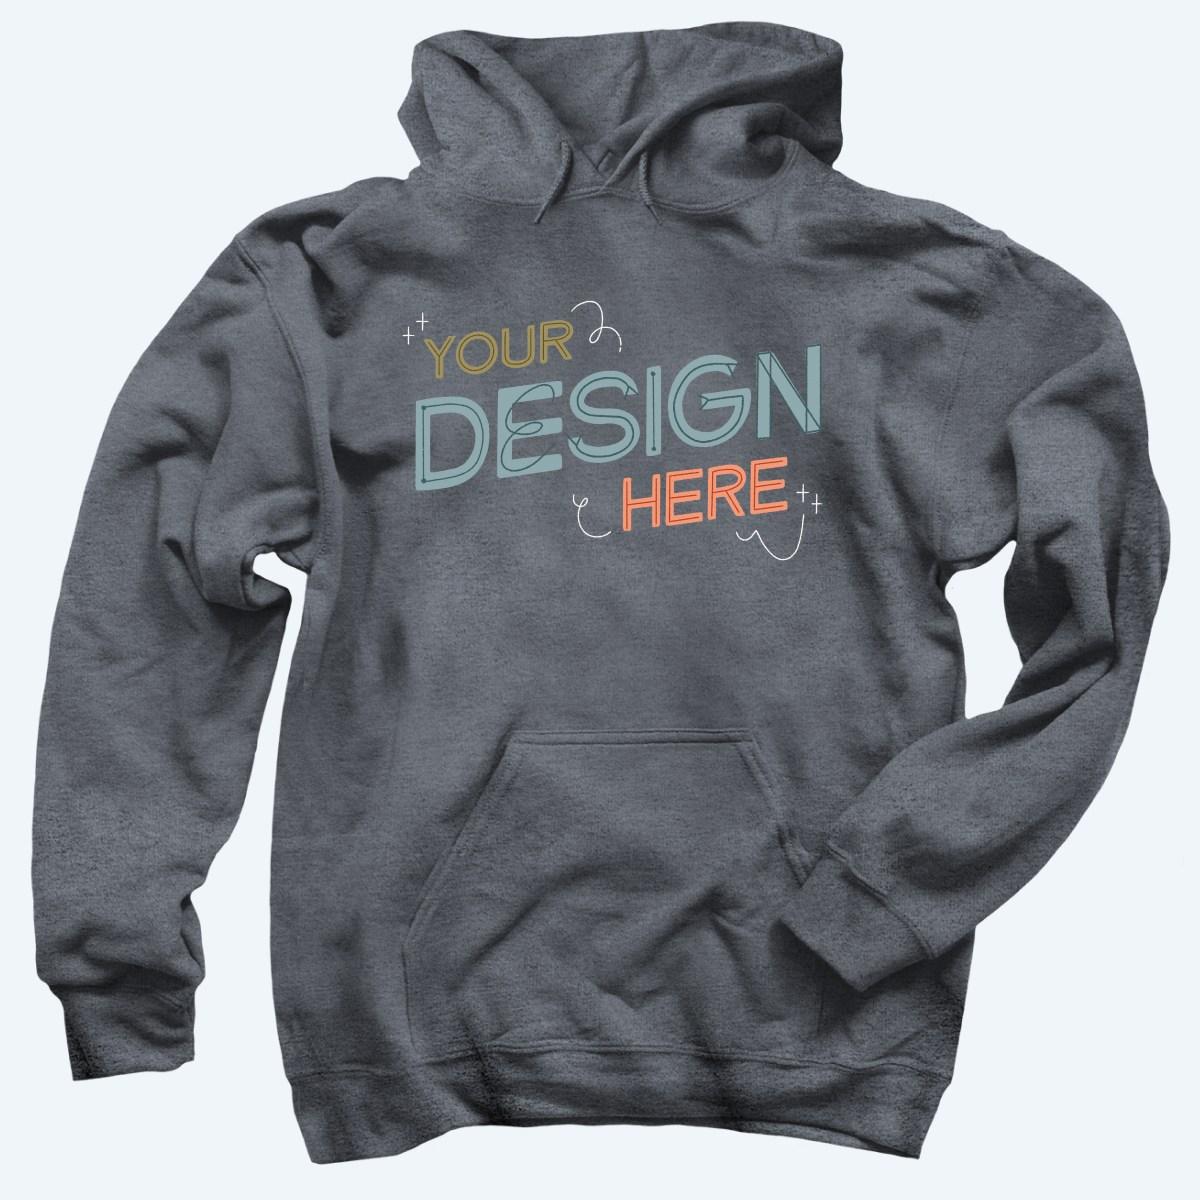 Premium Vector  Hoodie shirts template.jacket design,sportswear